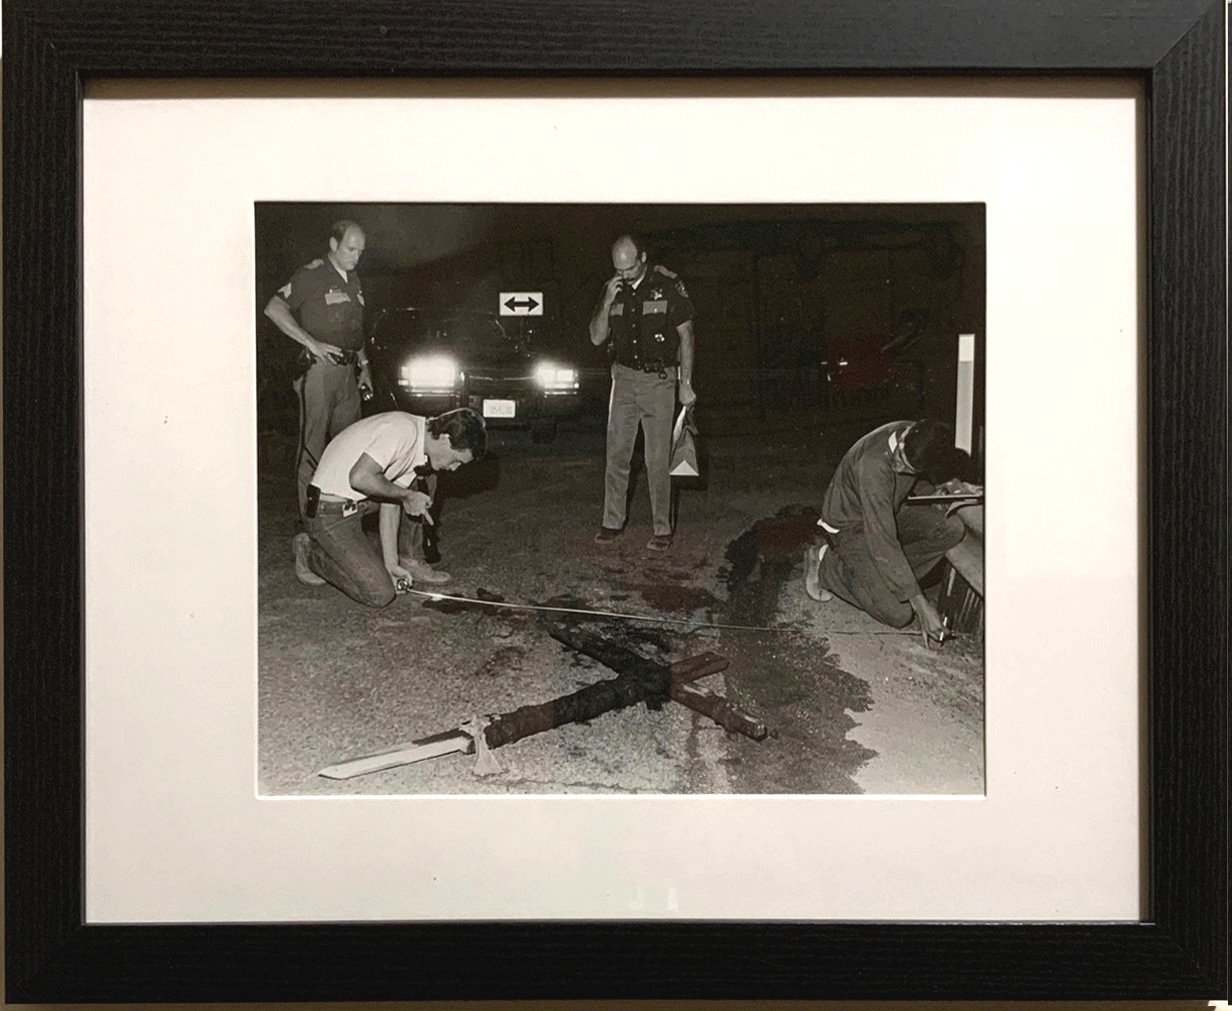 9. 9/6/1988 –Deputies and fire inspectors examine scene of cross burning Monday. Spokane, Washington